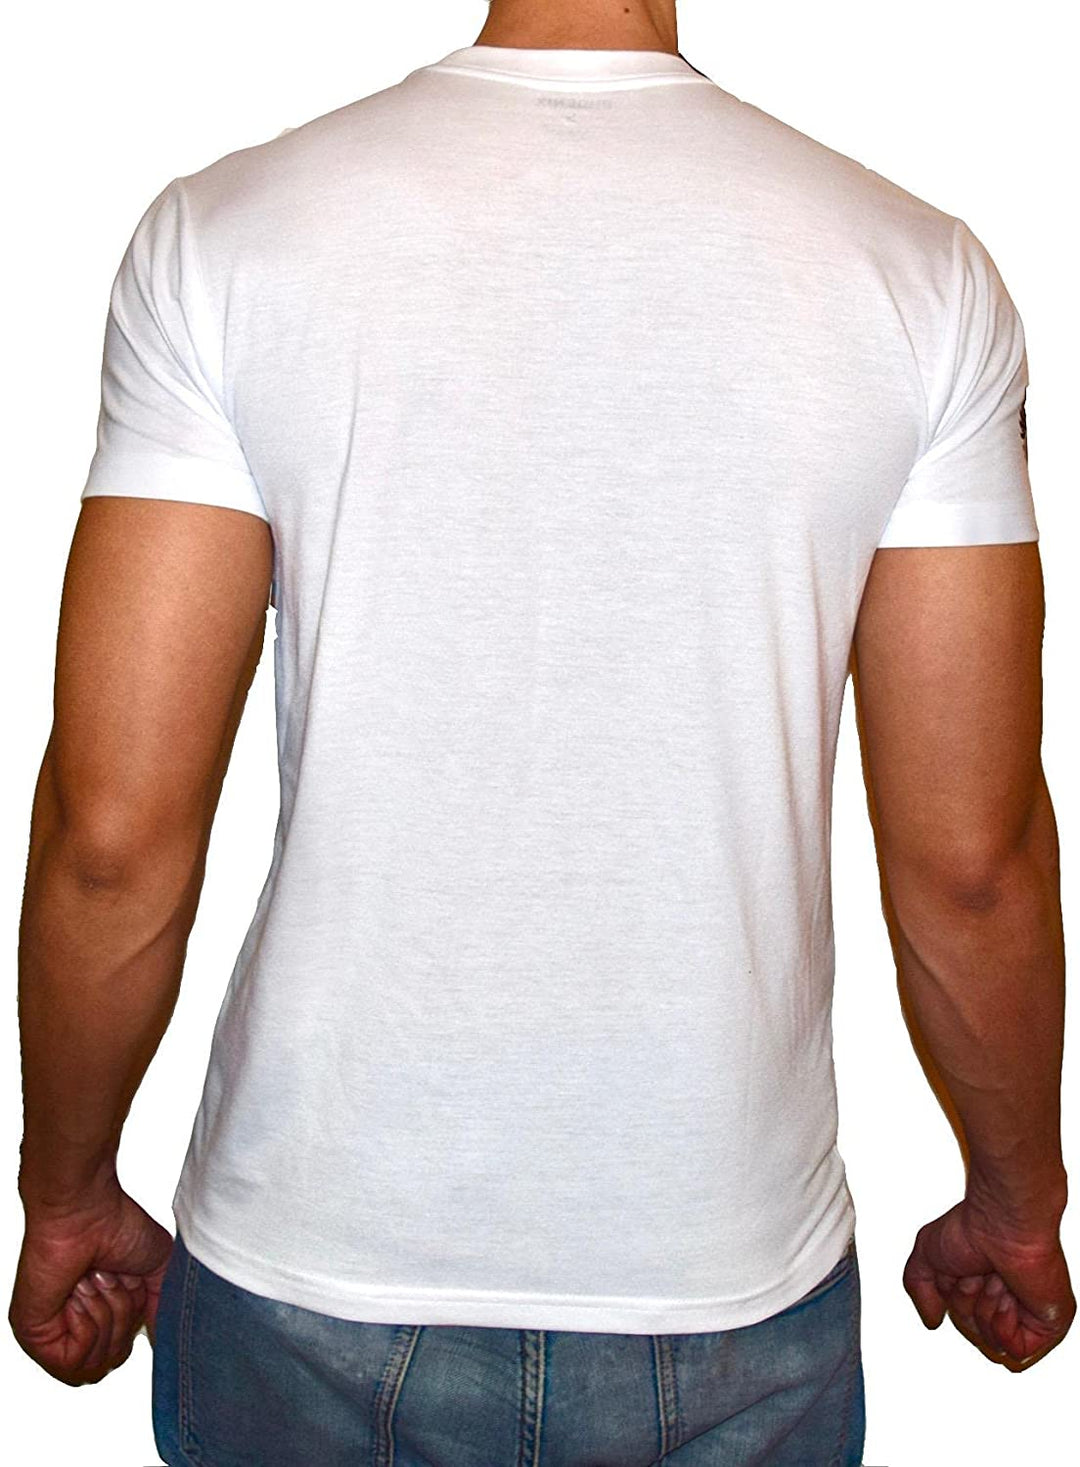 PHOENIX Basic White Round Neck T-Shirt For Men